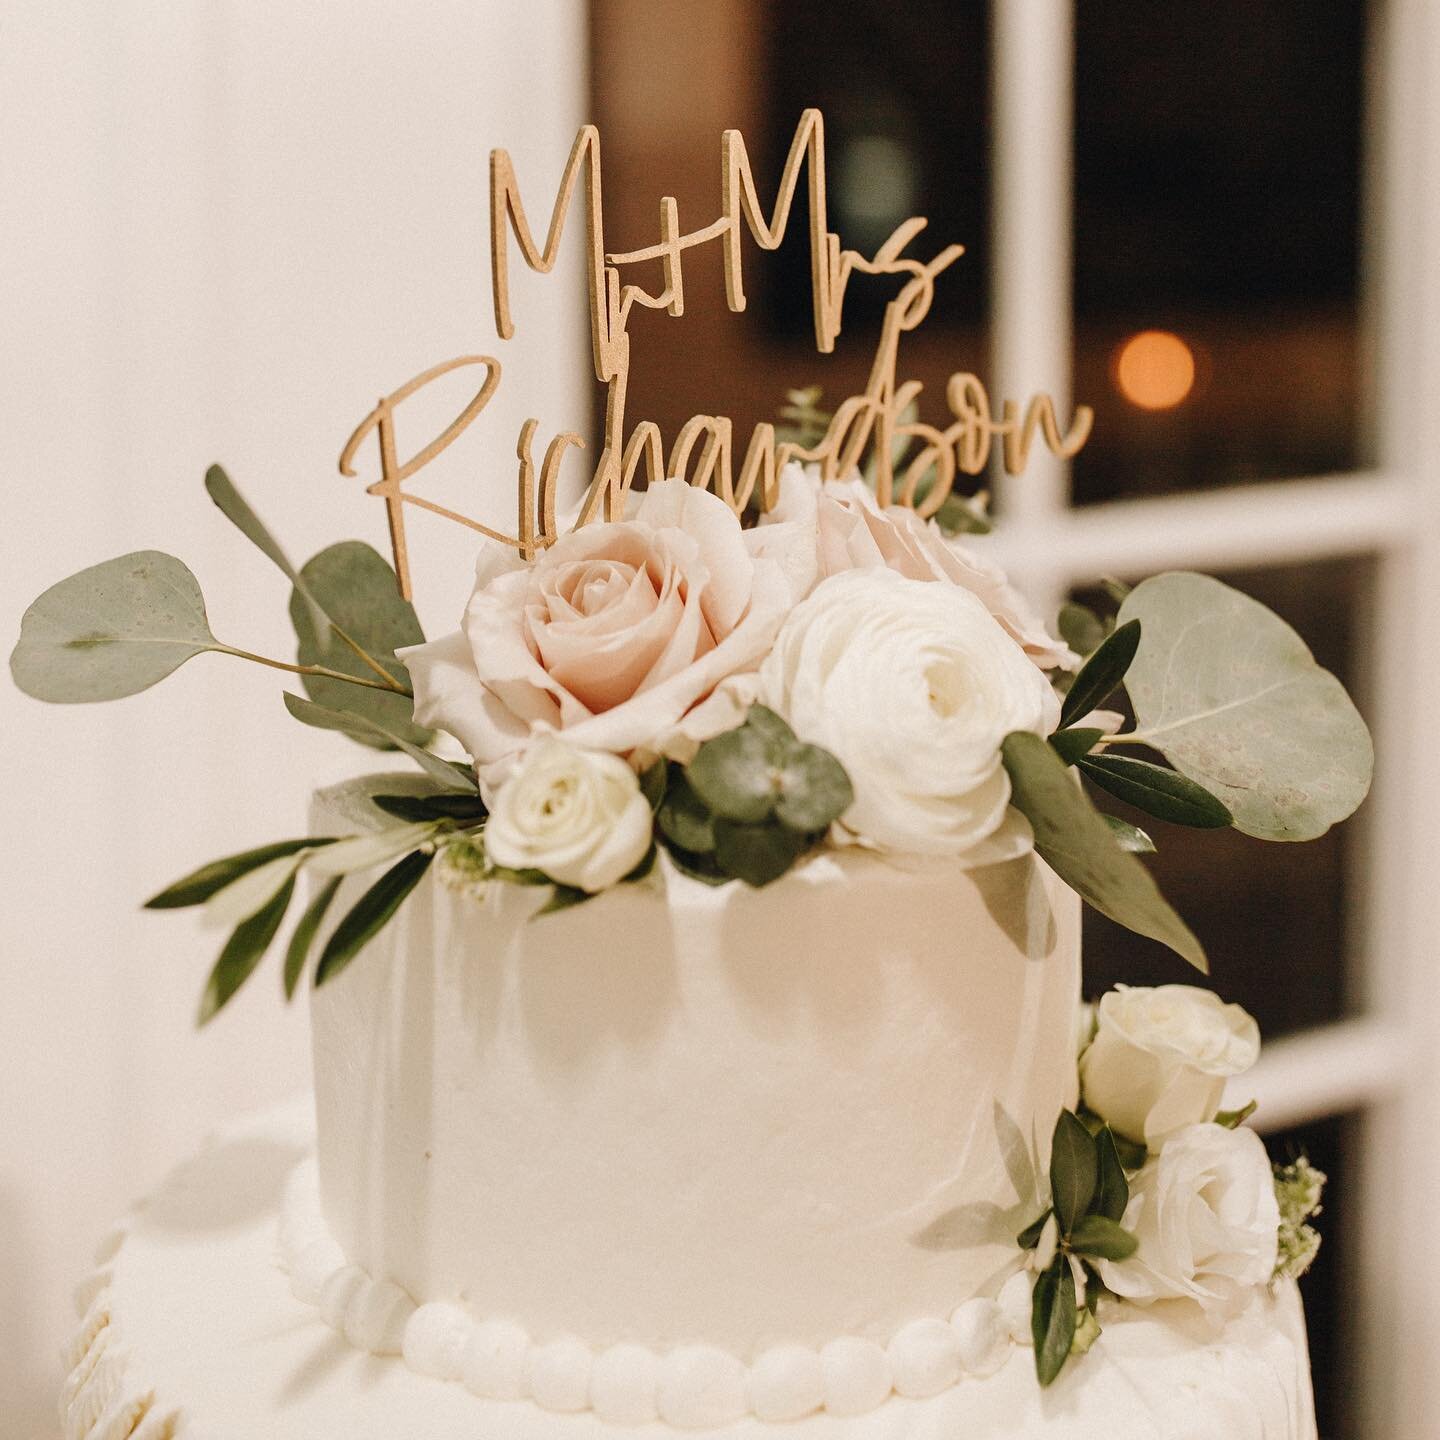 Let&rsquo;s share some cake!😋 LOVE the last pic🤍
.
.
.
#weddingphotography #orlandoweddingphotographer #orlandoweddingvenue #weddingplanner #justengaged #weddingcake #tuscawillacountryclub #wedding2023ideas